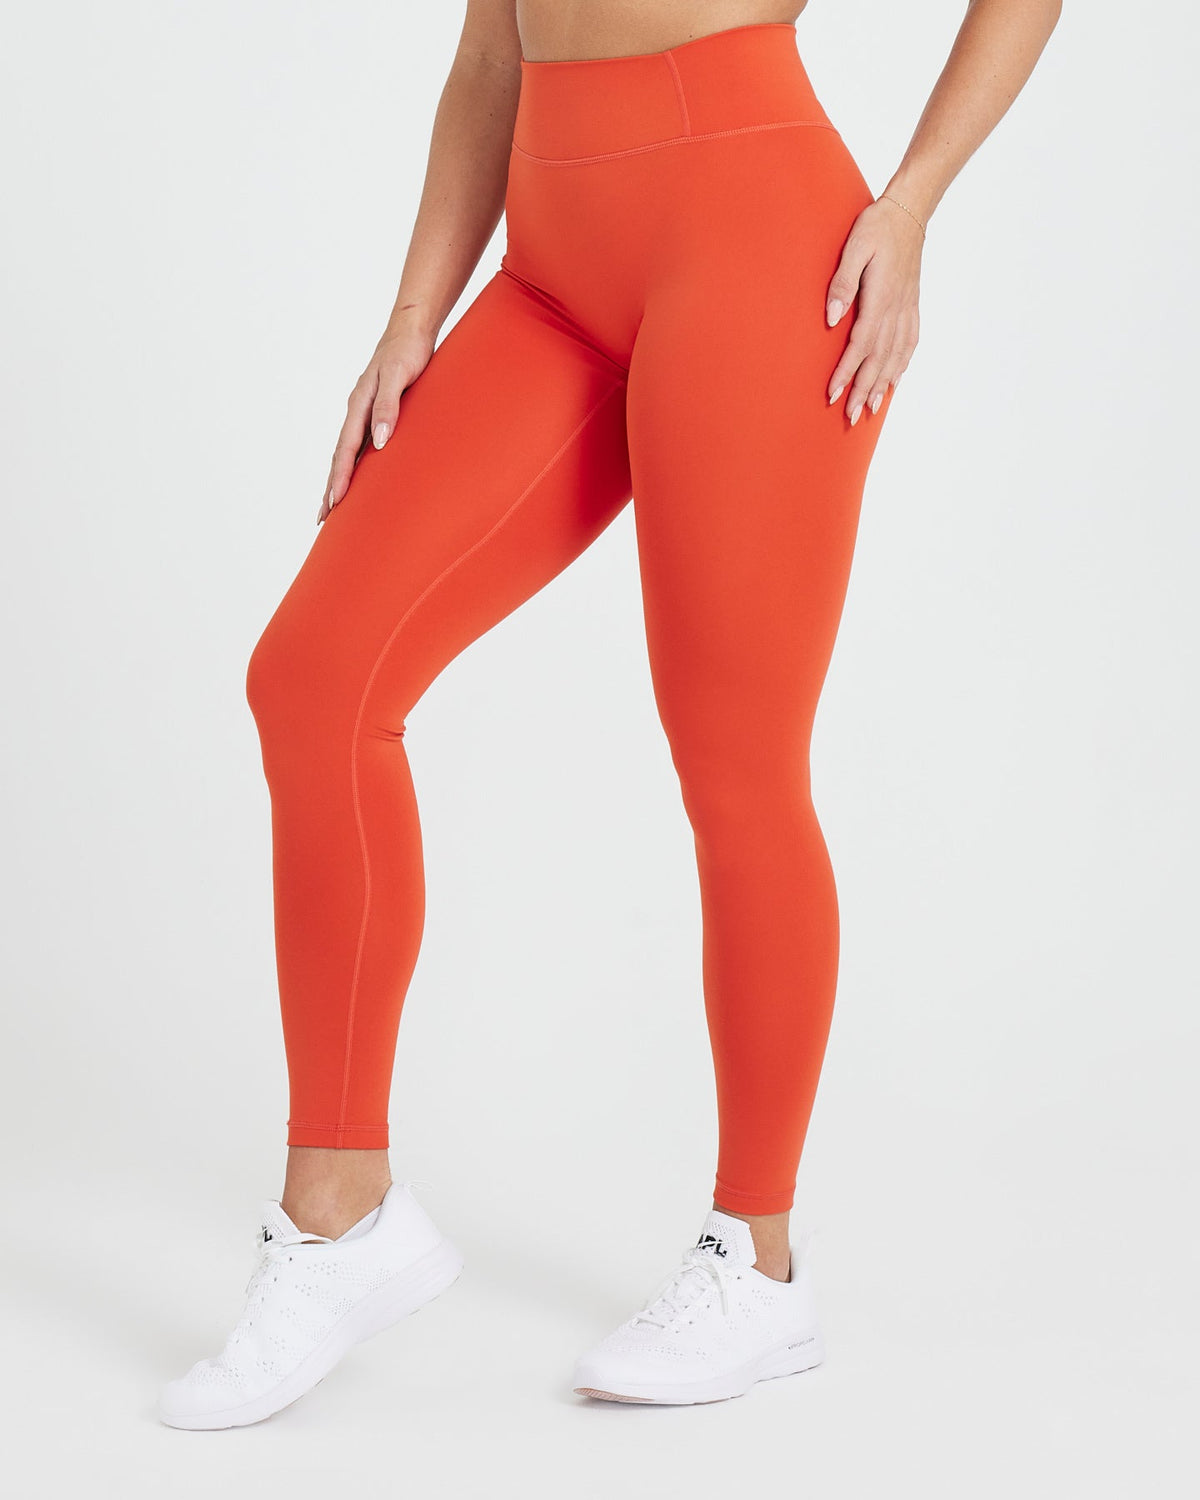 BAT LEGGINGS Women's Leggings Orange and Black Bat Print Leggings for  HALLOWEEN Yoga Pants Yoga Leggings Adult and Plus Sizes Available - Etsy